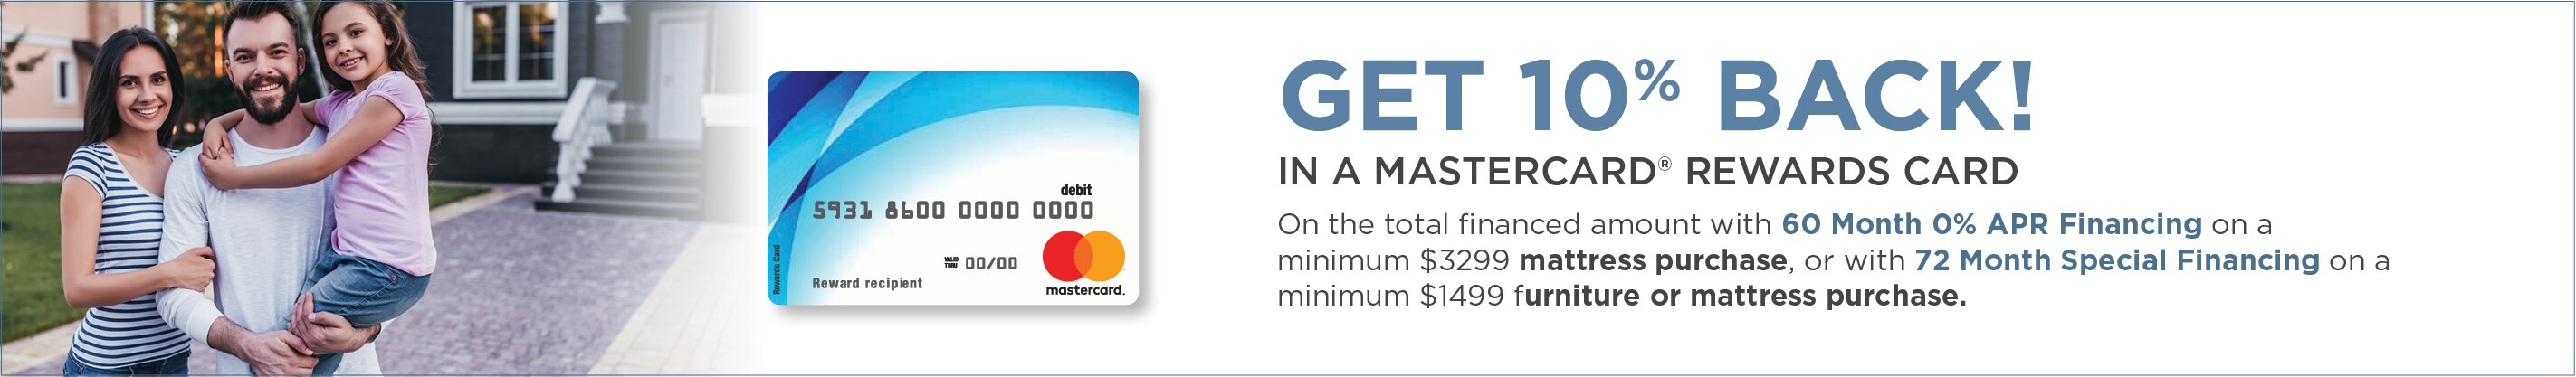 10% Back MasterCard Rewards Card Rebate